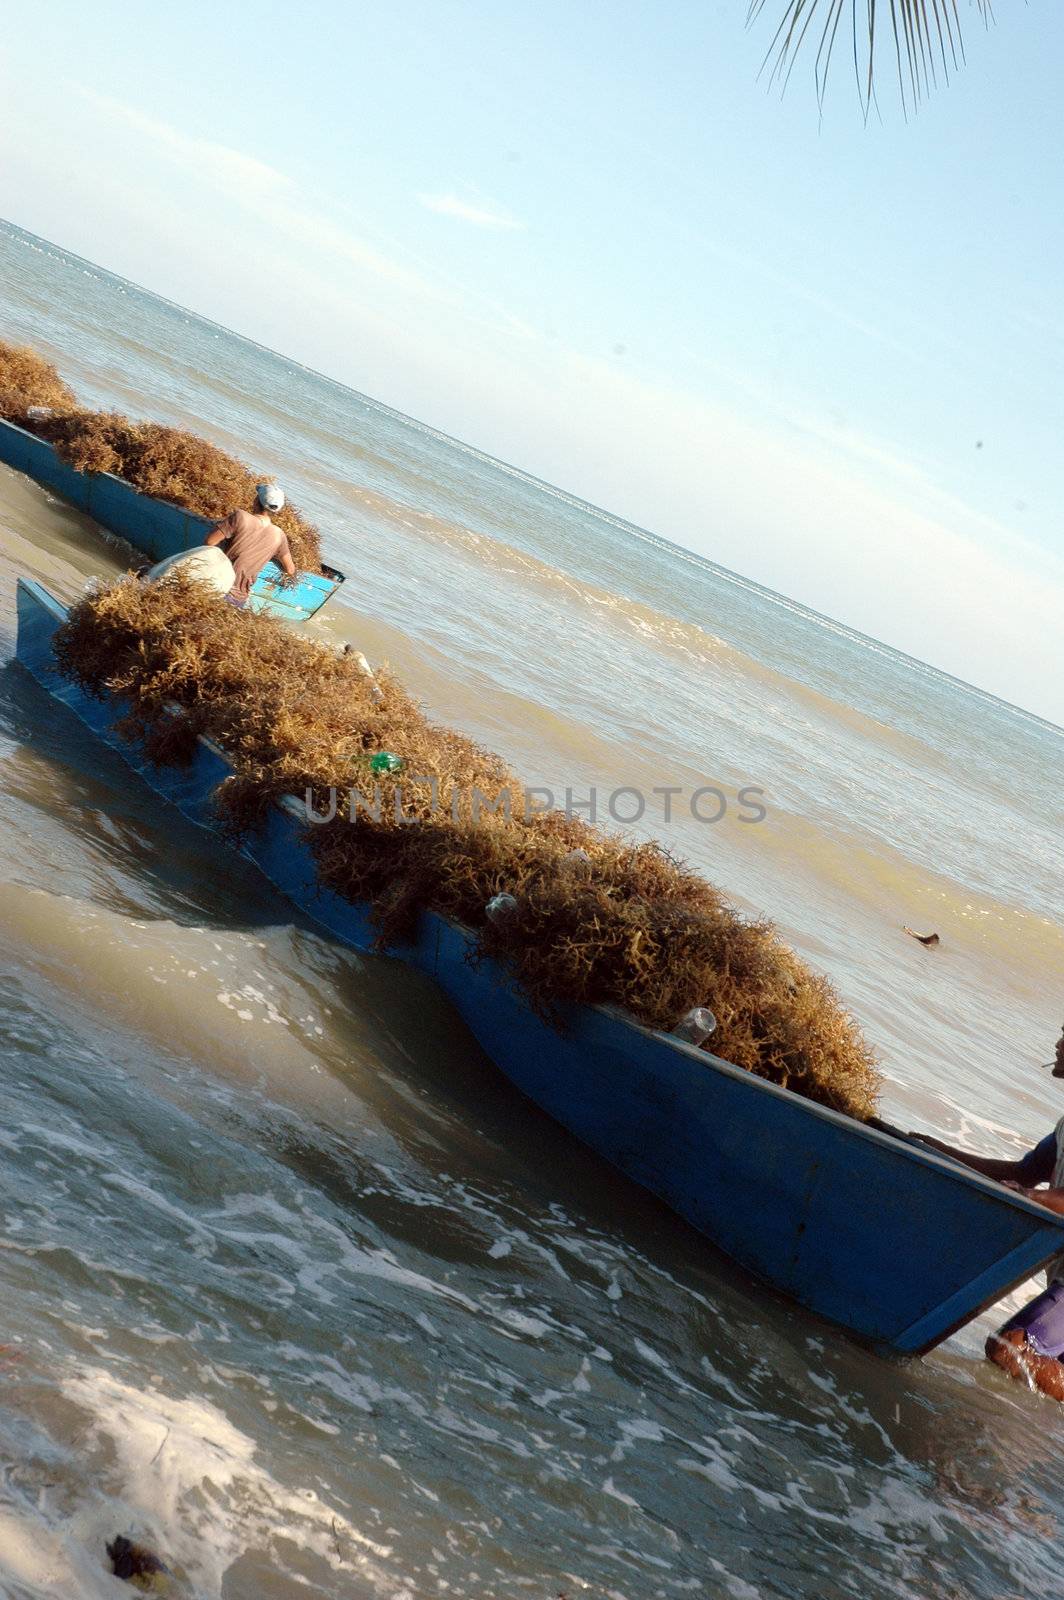 Seaweed fisherman activities at the Amal beach Tarakan Indonesia 